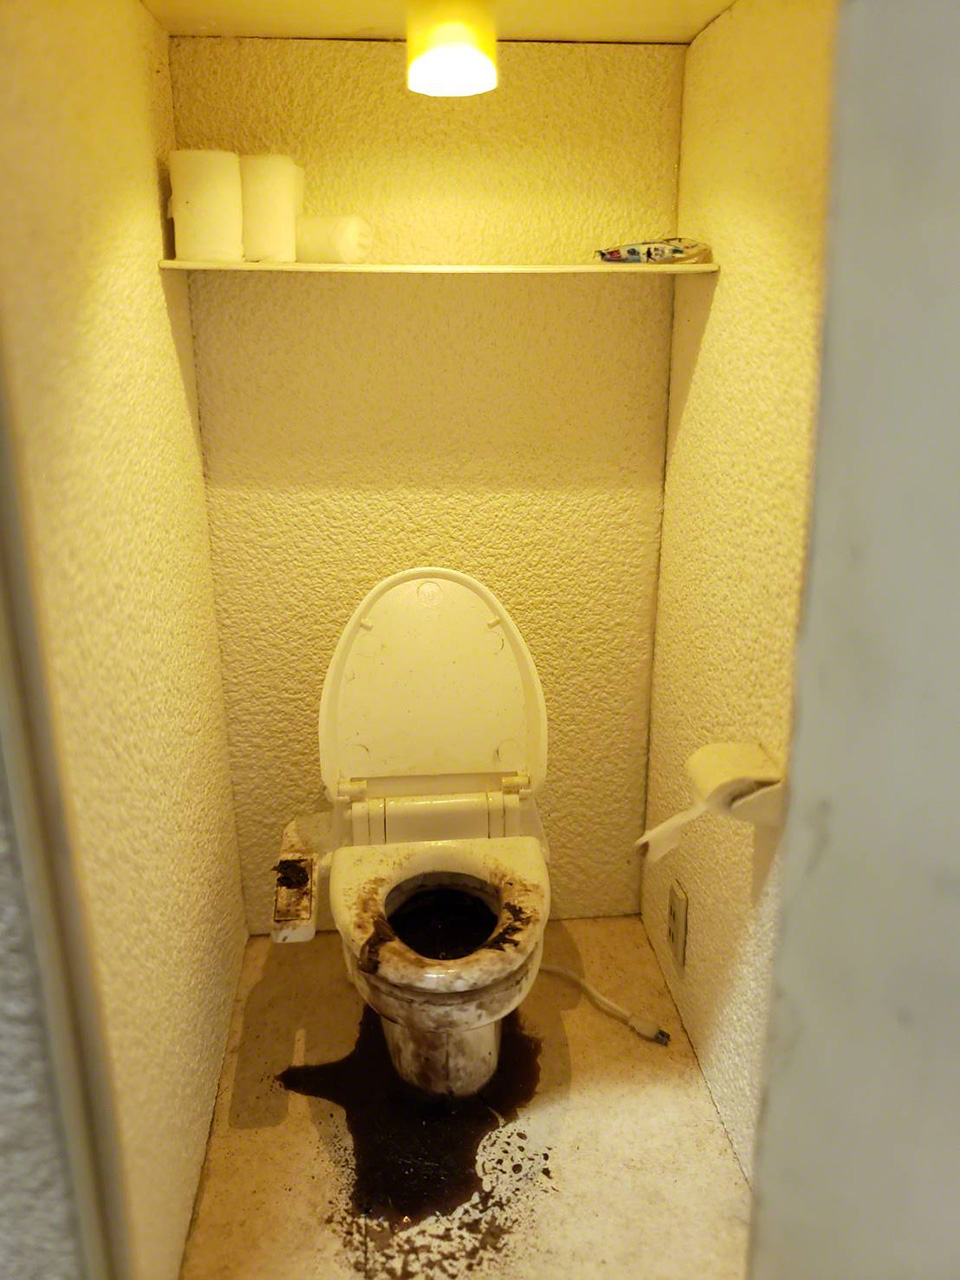 Kojima’s “Heat Shock Kodokushi on the Toilet” conveys to viewers the deadly danger of this phenomenon.